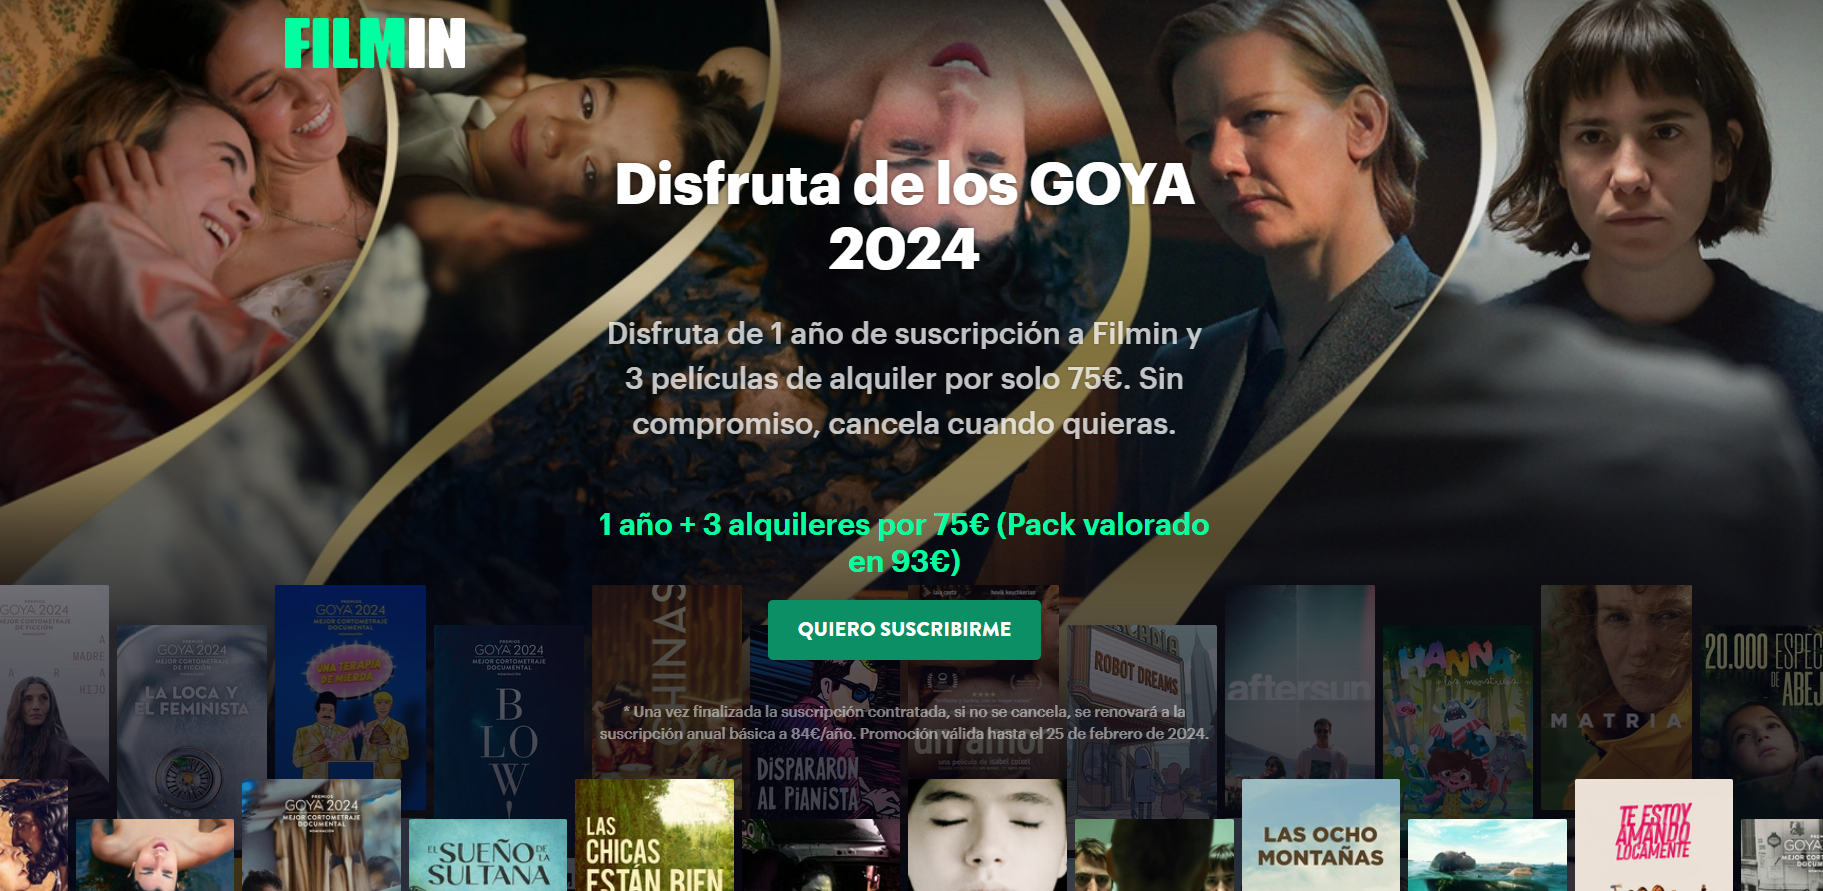 Filmin oferta películas Goya